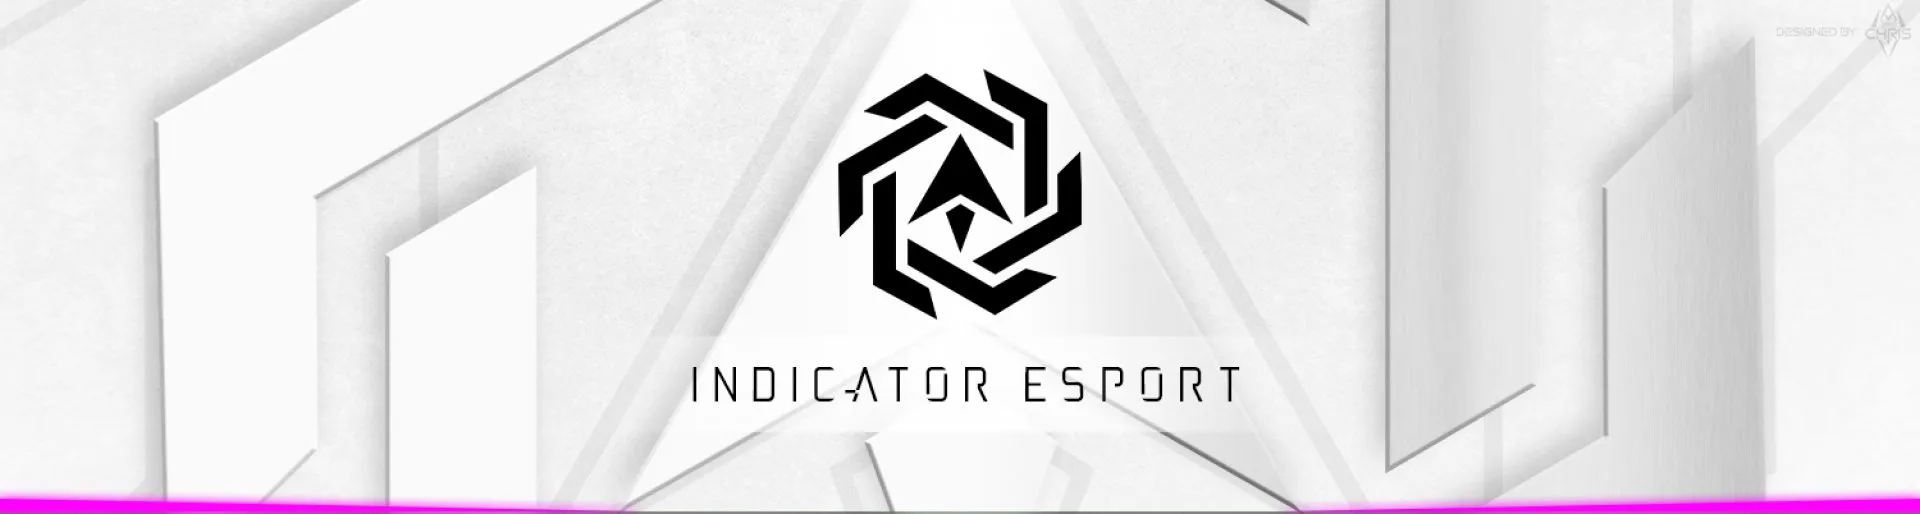 Indicator esports banner